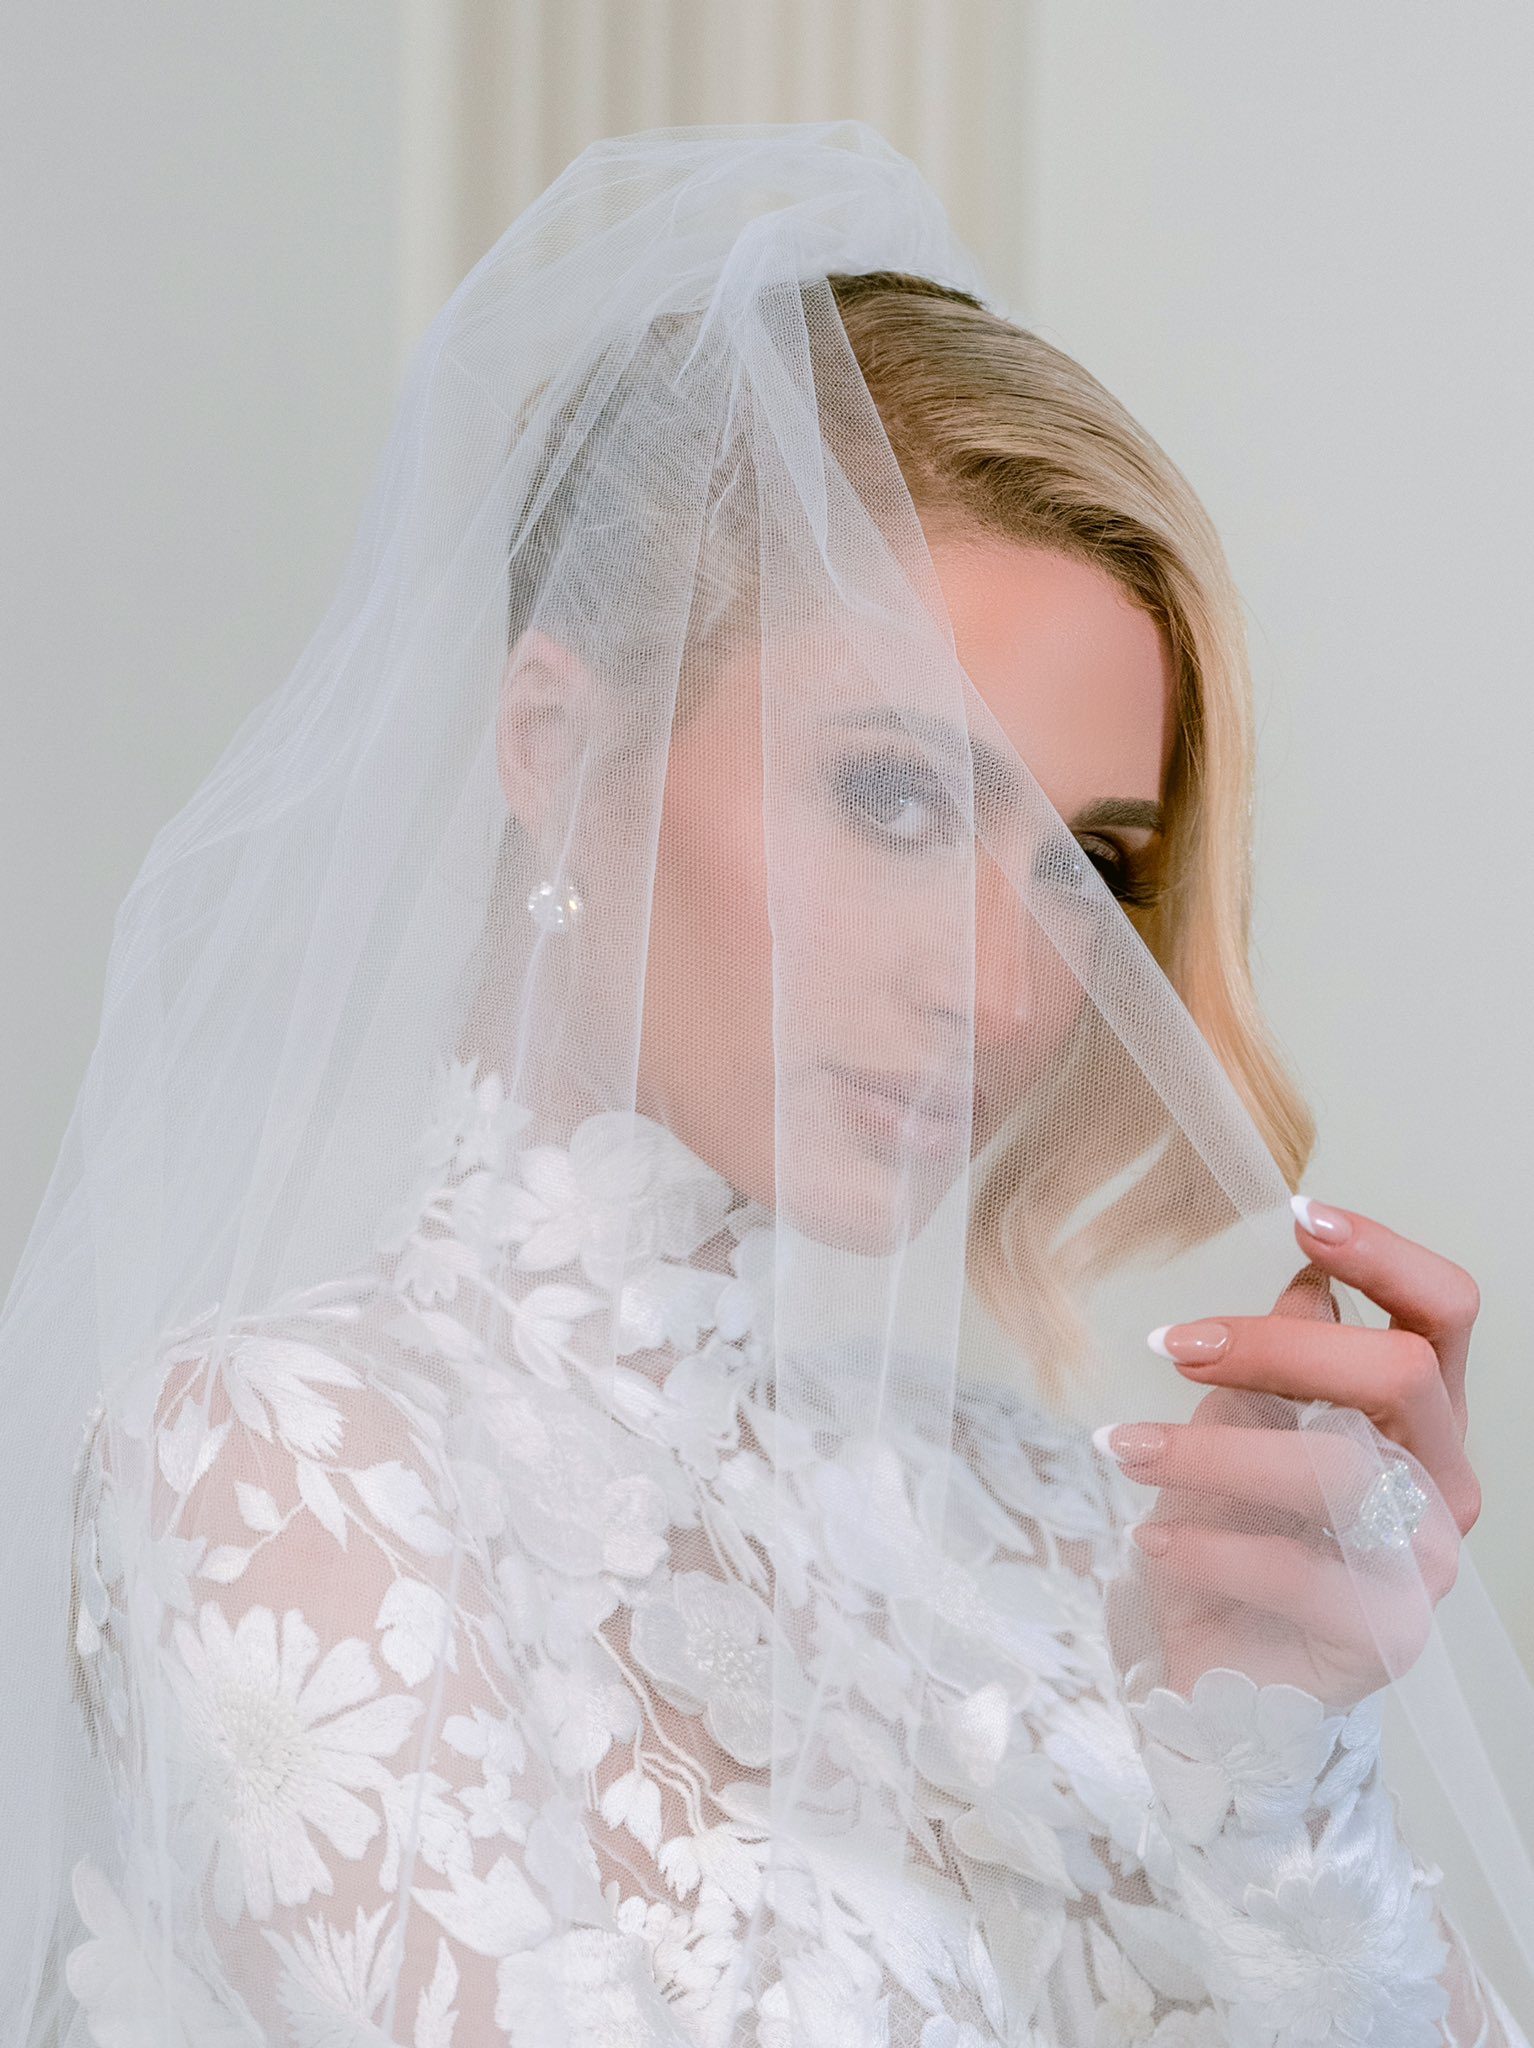 Paris Hilton marries in ‘true fairy tale wedding’